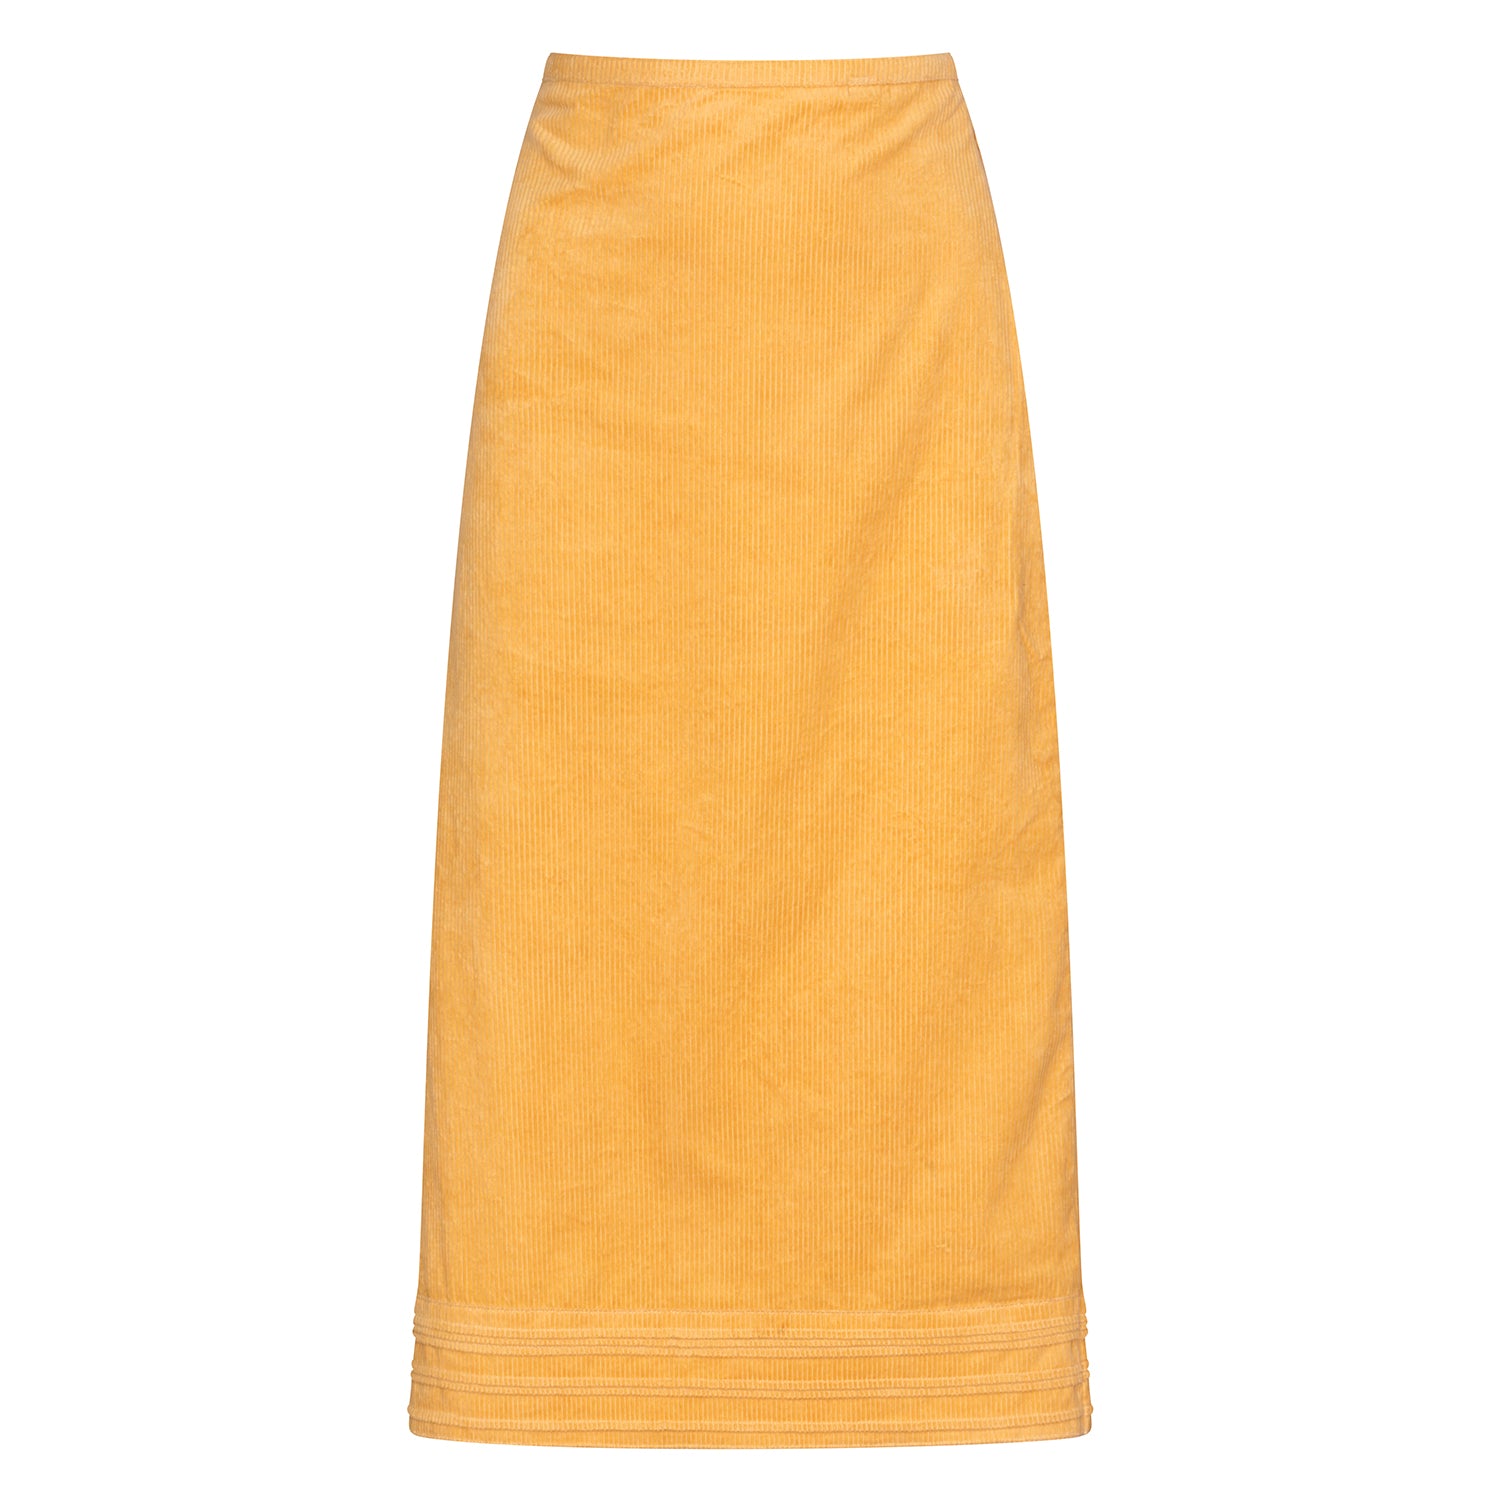 Simple Skirt - Gold